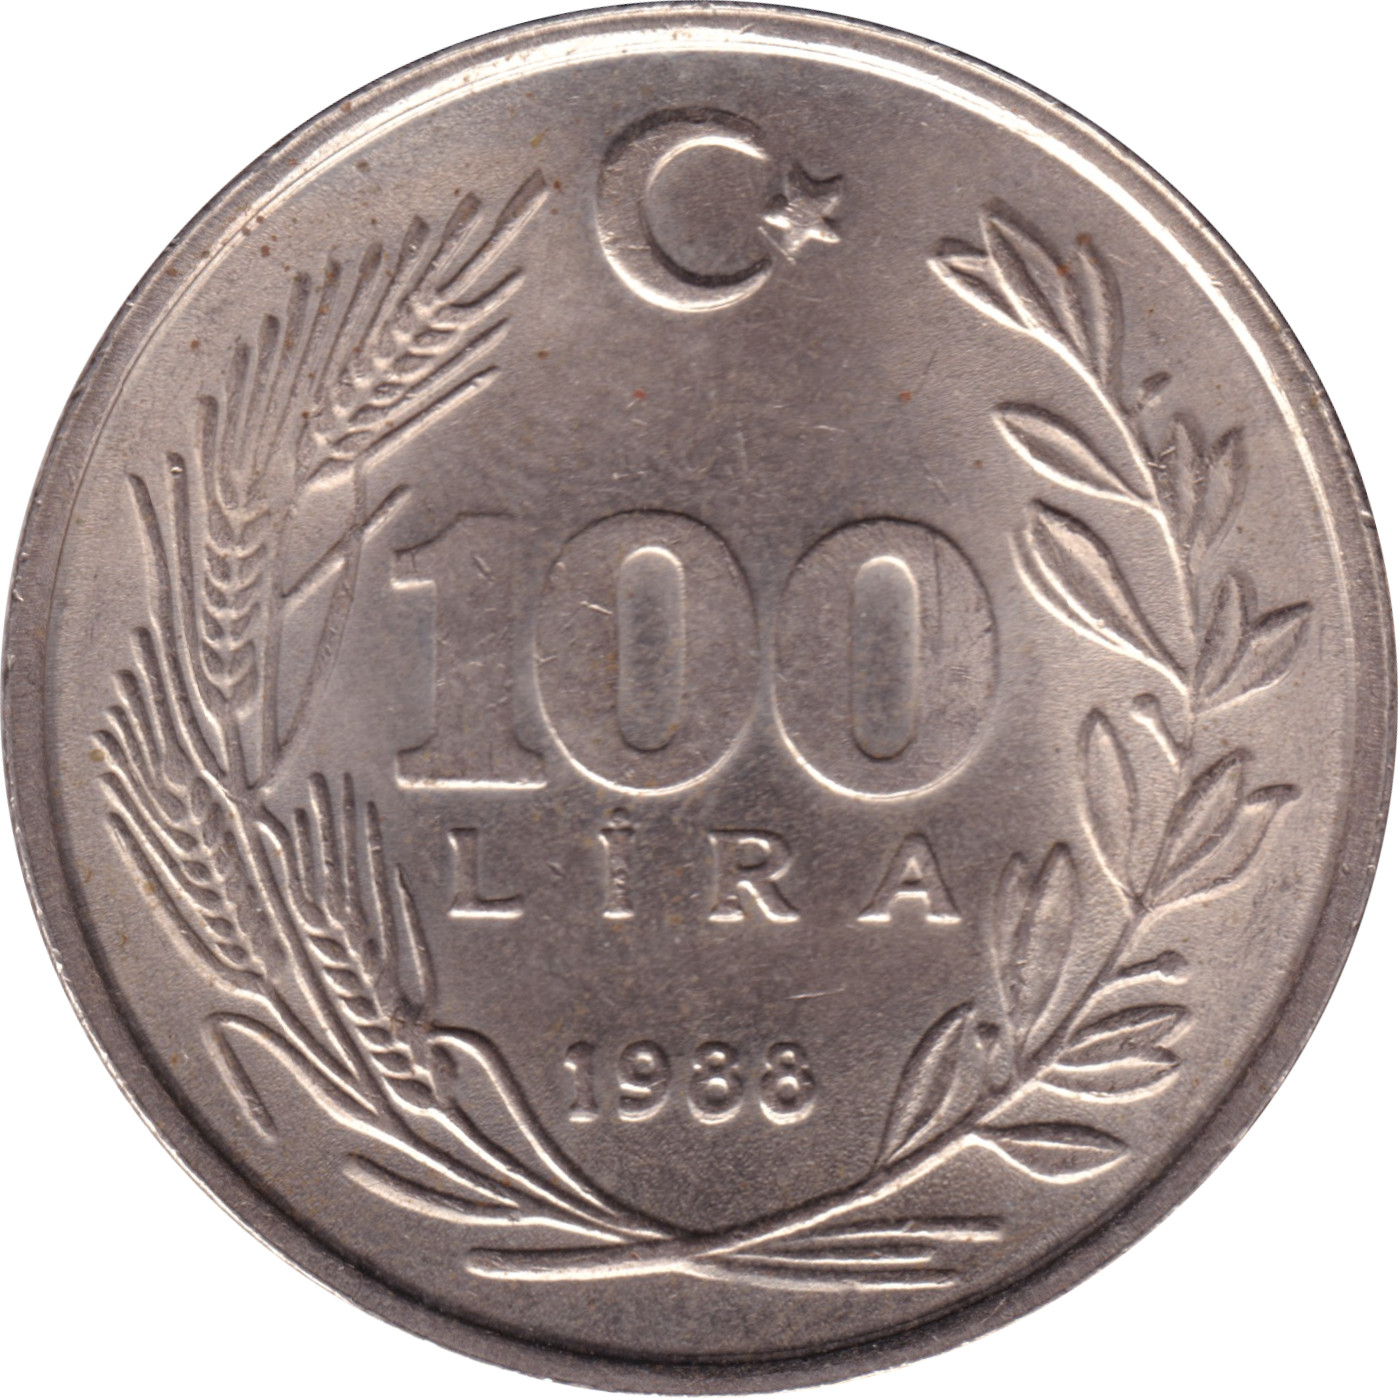 100 lira - Moustafa Kemal • Type 1